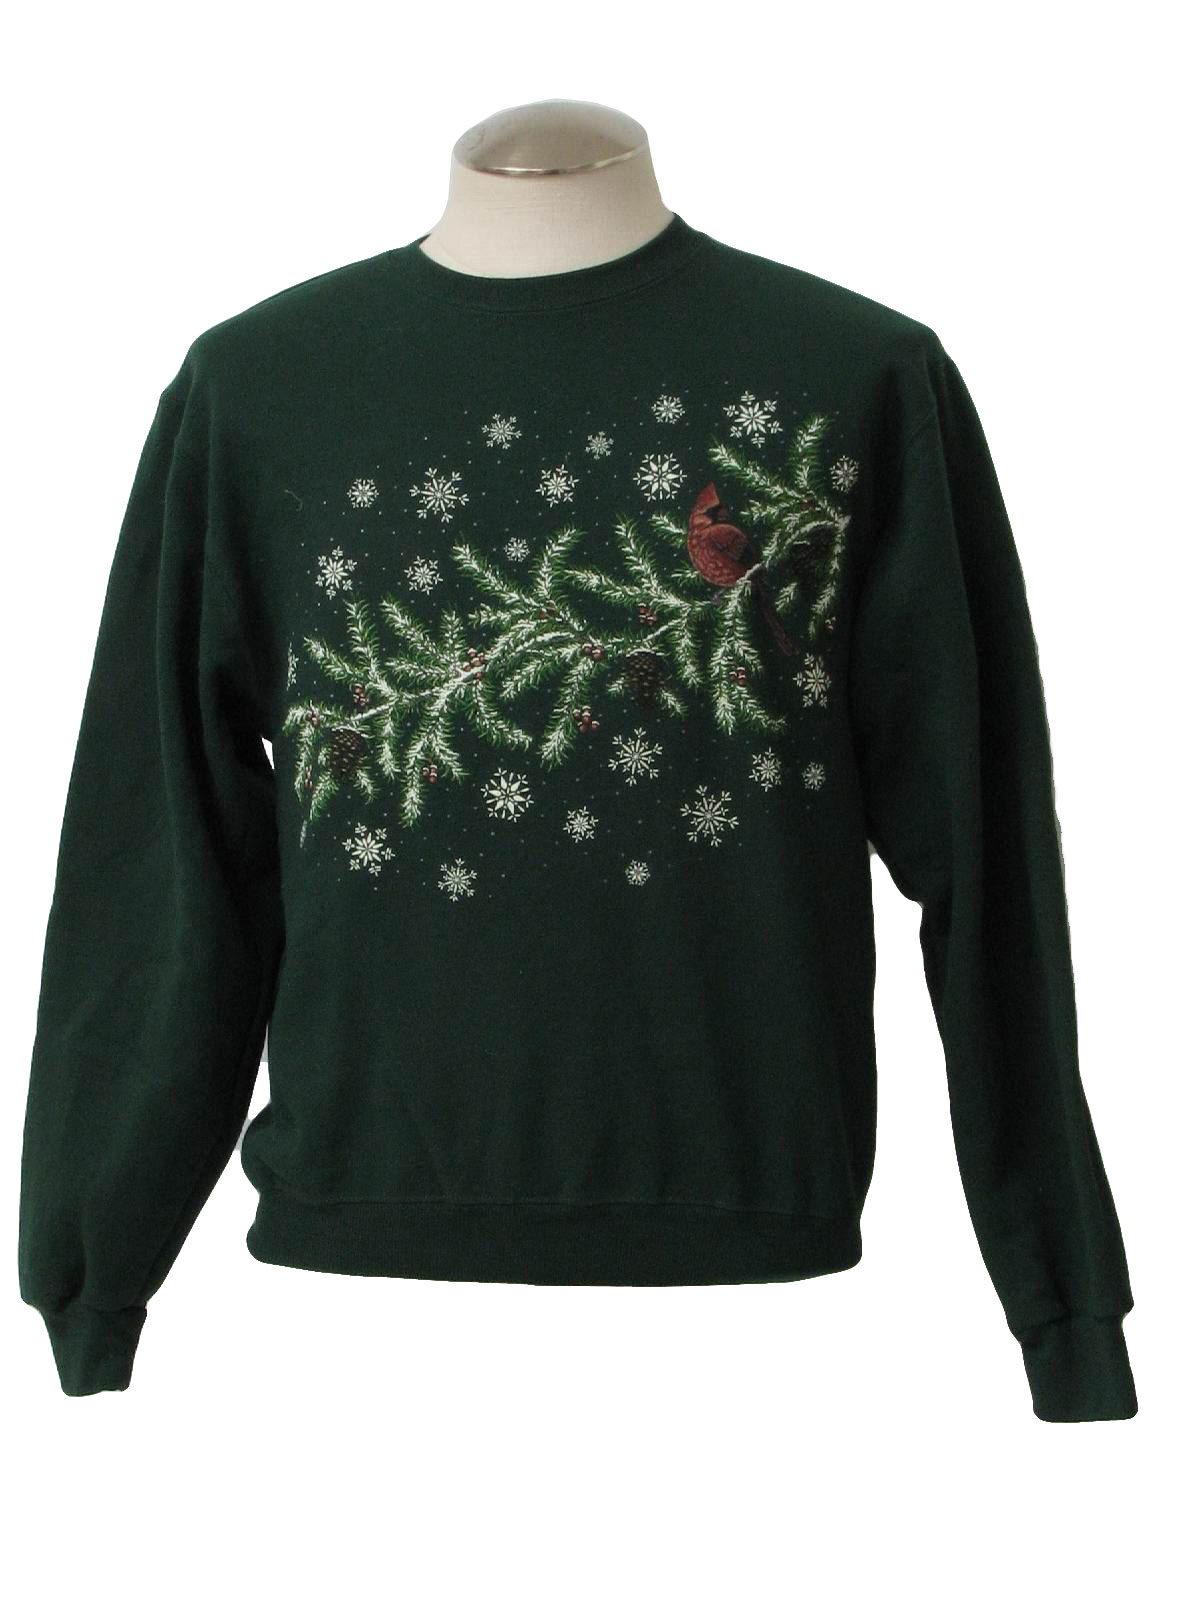 Womens Ugly Christmas Sweatshirt: -Jerzees- Womens green